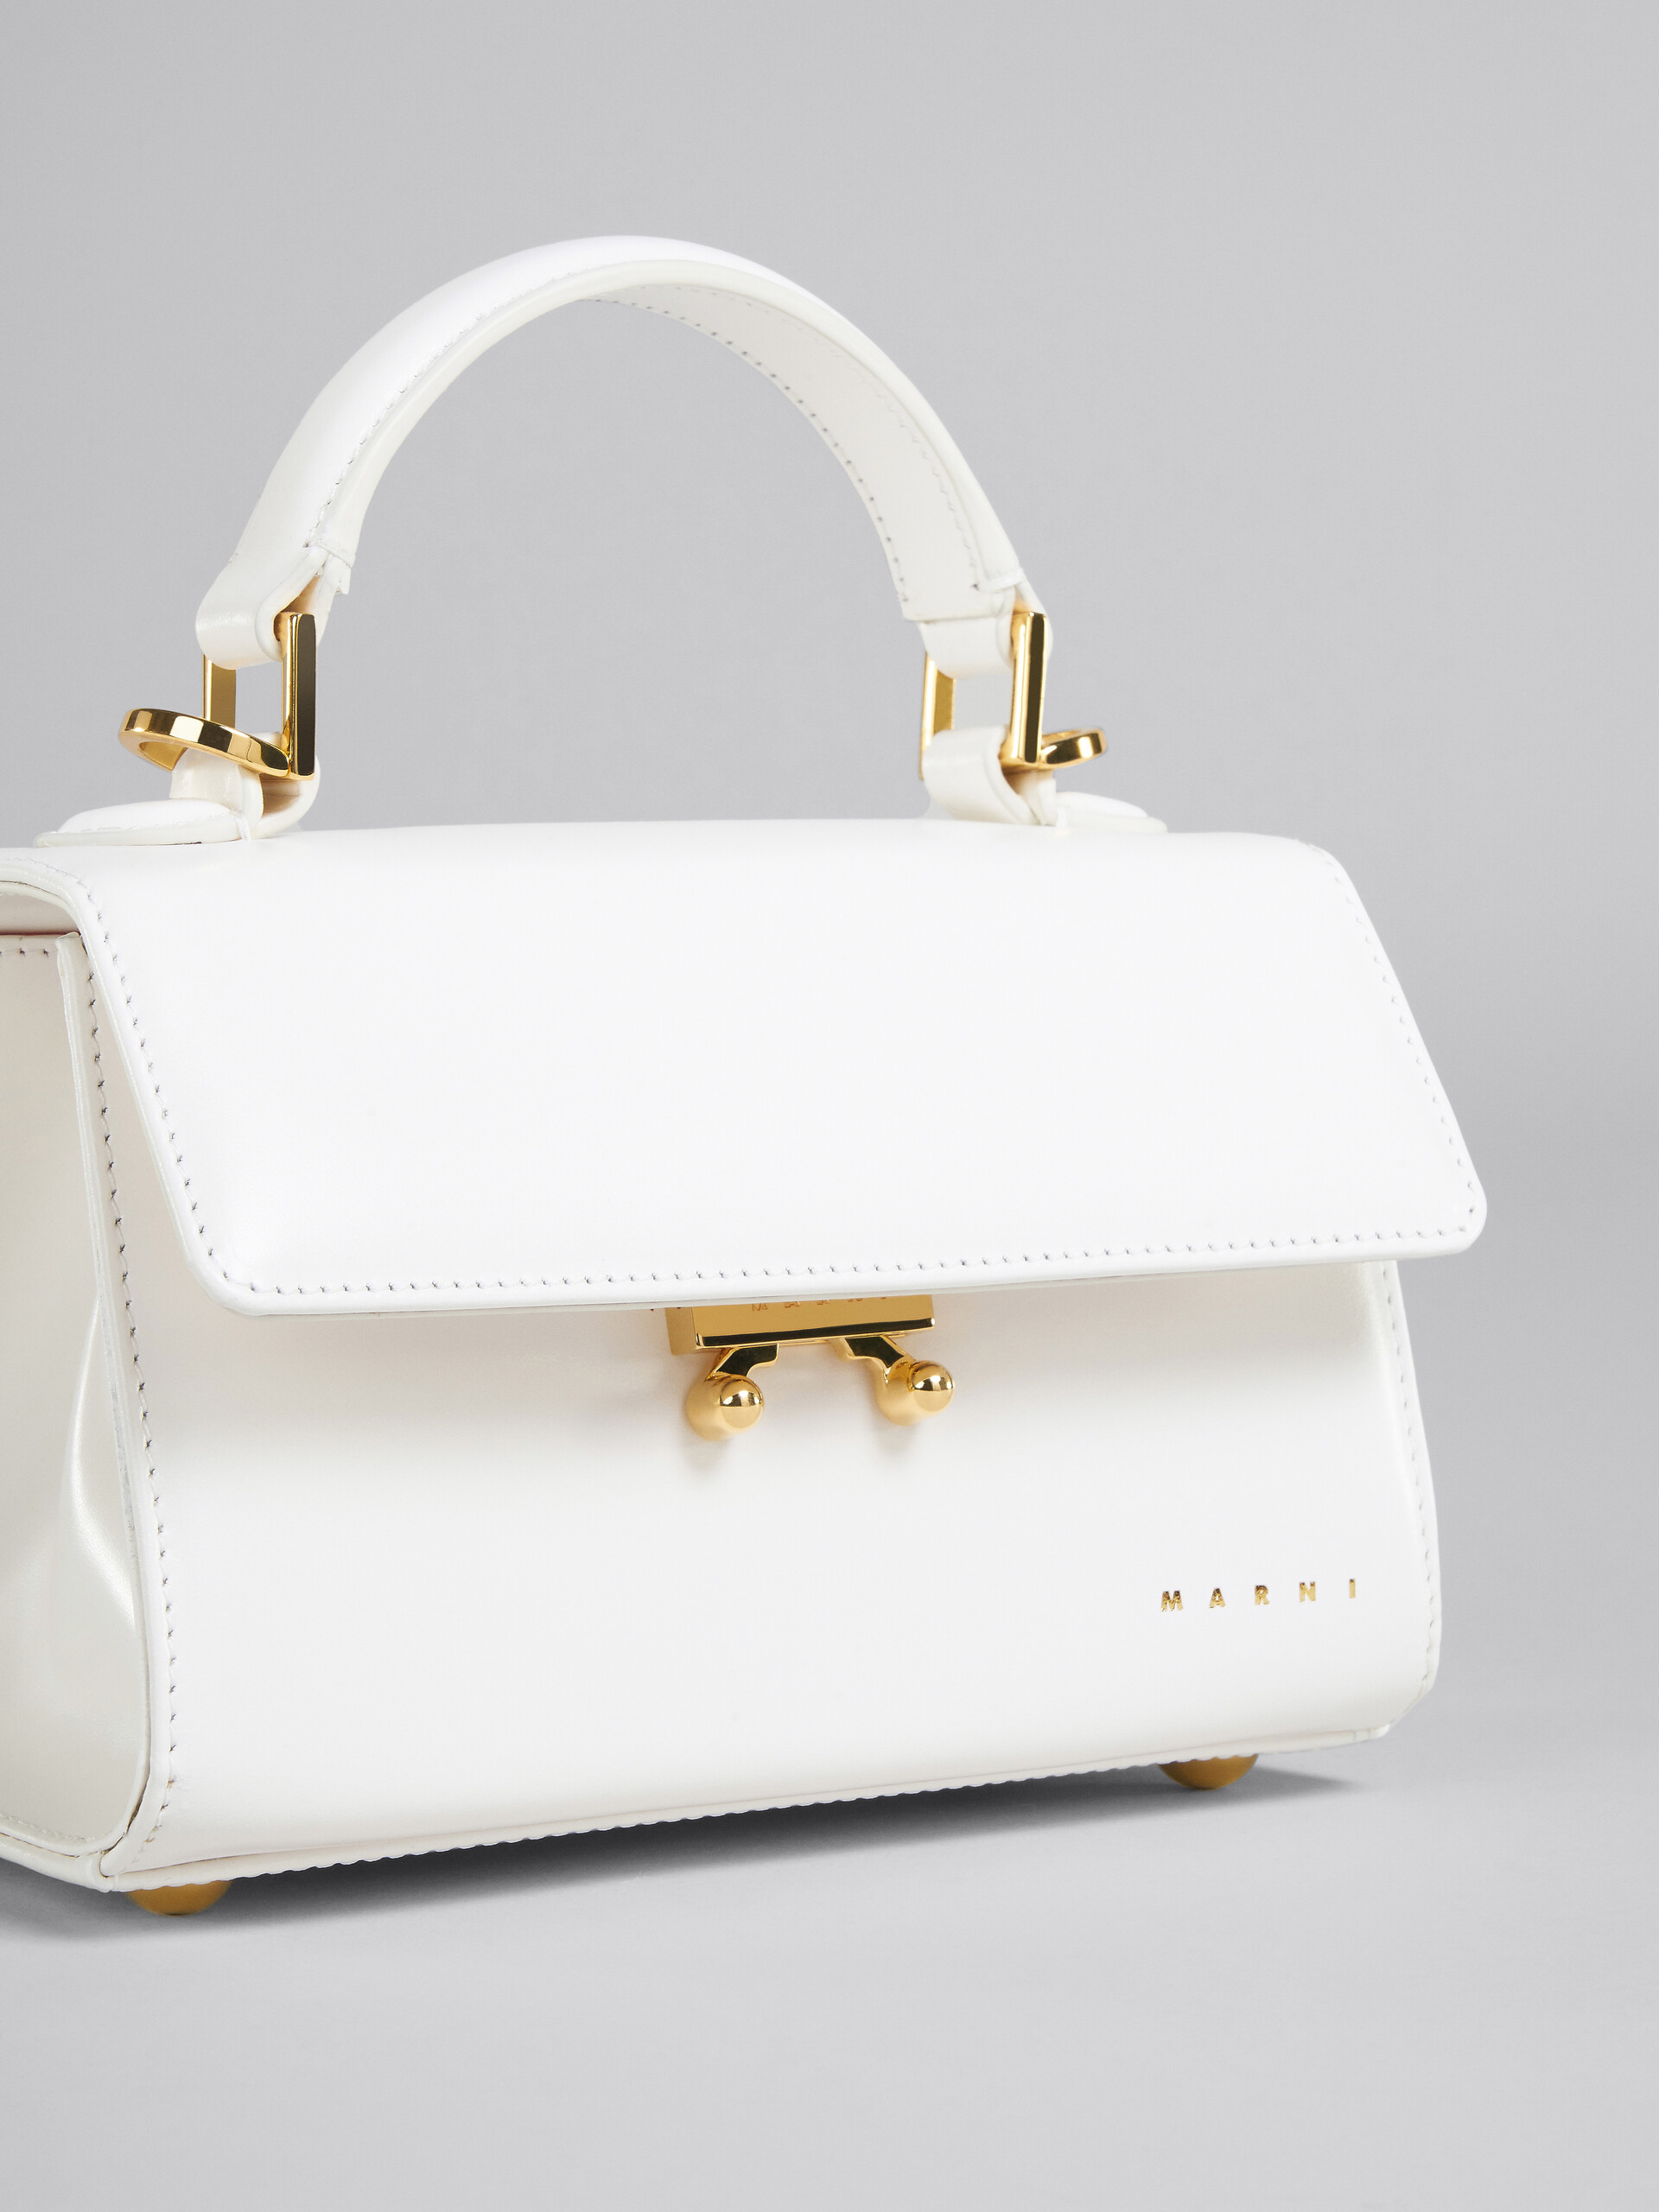 Relativity Mini Bag in white leather - Handbag - Image 5